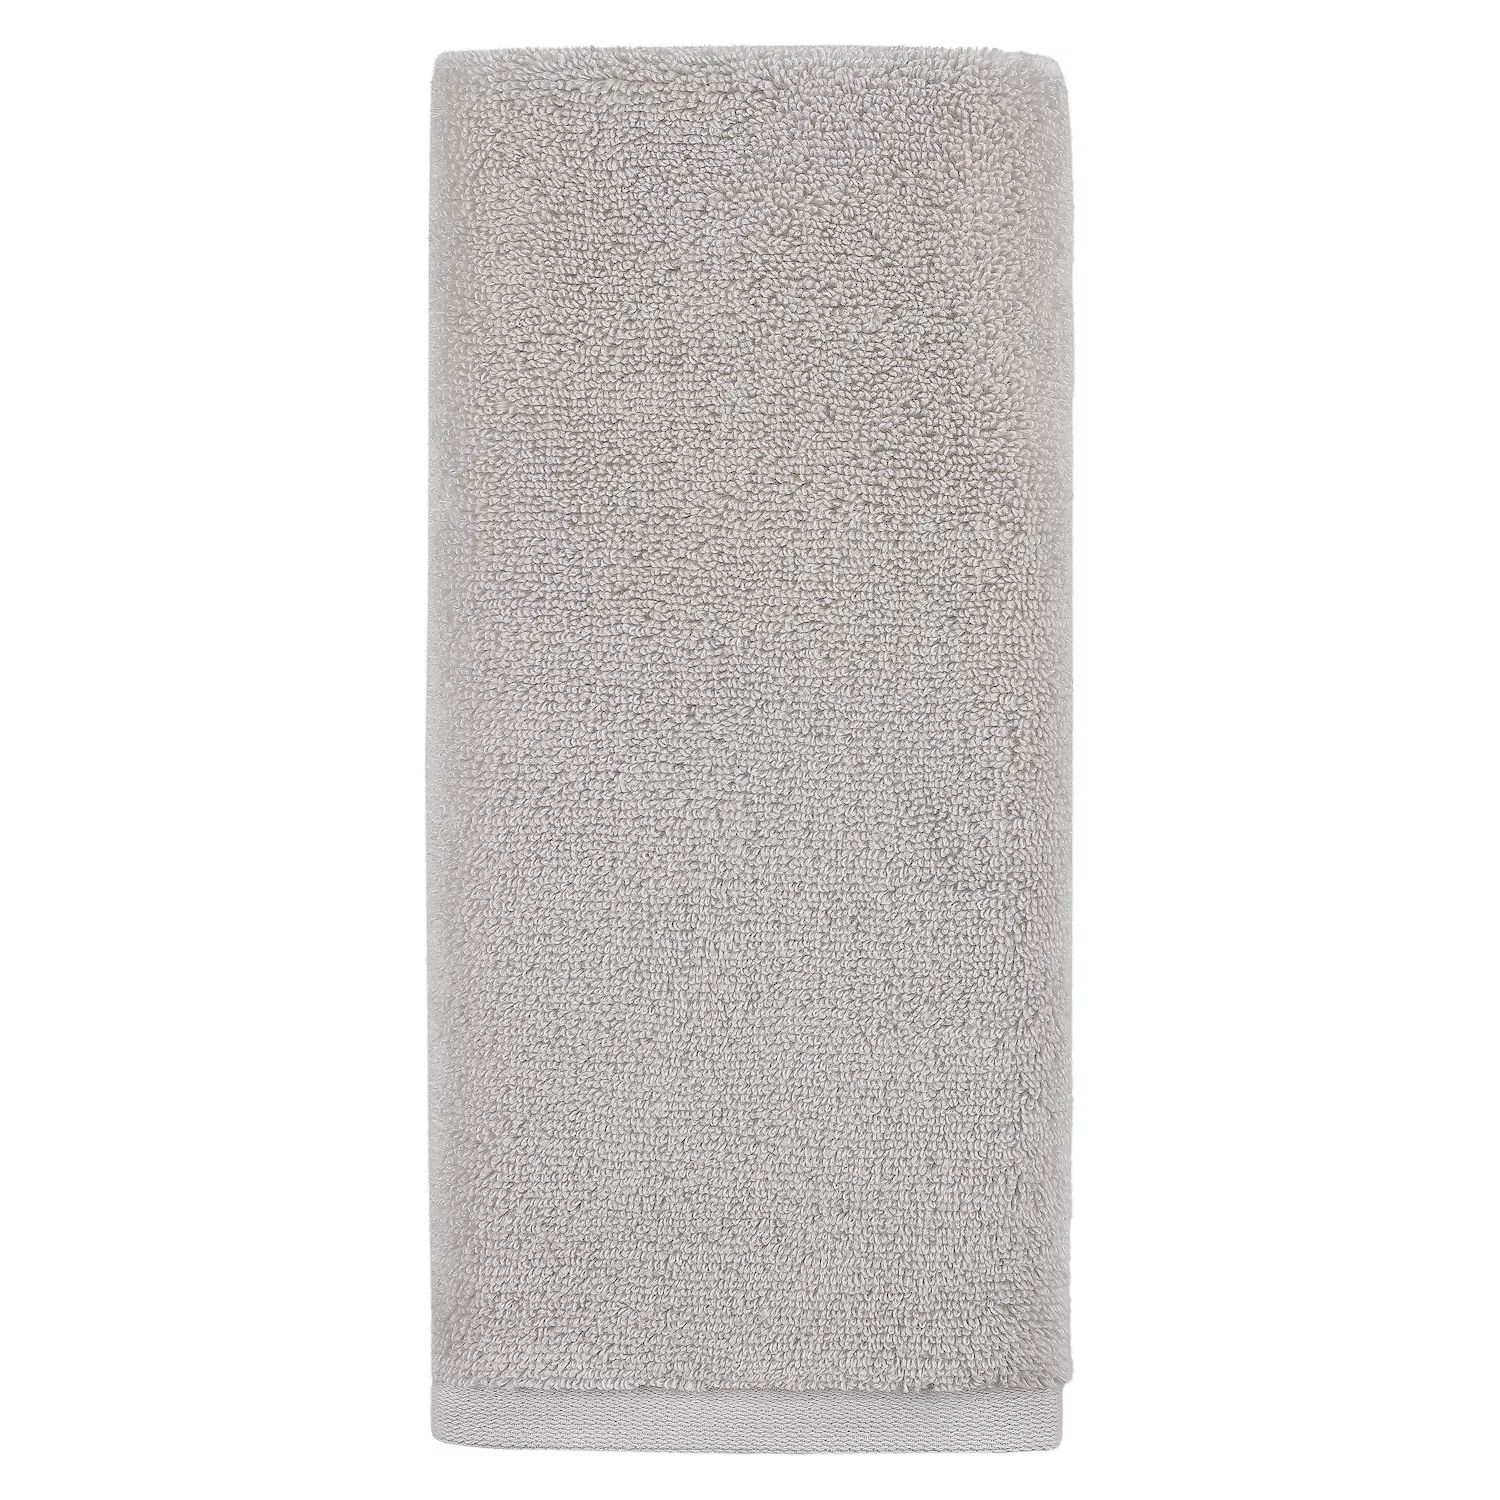 Супермягкое банное полотенце Sonoma Goods For Life георгина сиэтл декоративная